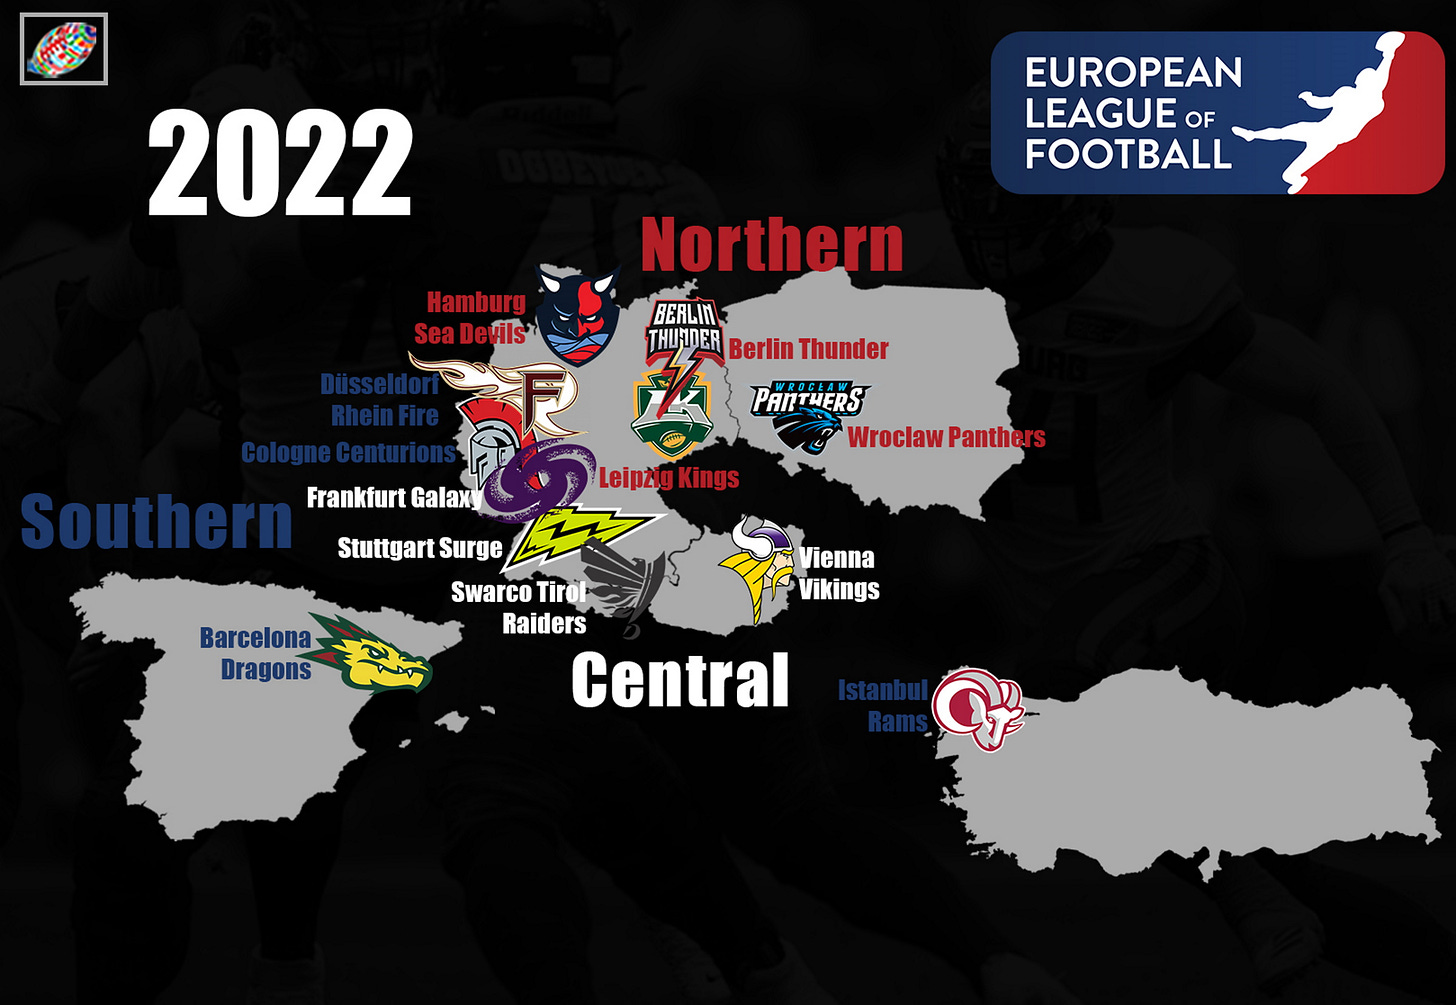 European League of Football expands to 12 teams for 2022 season